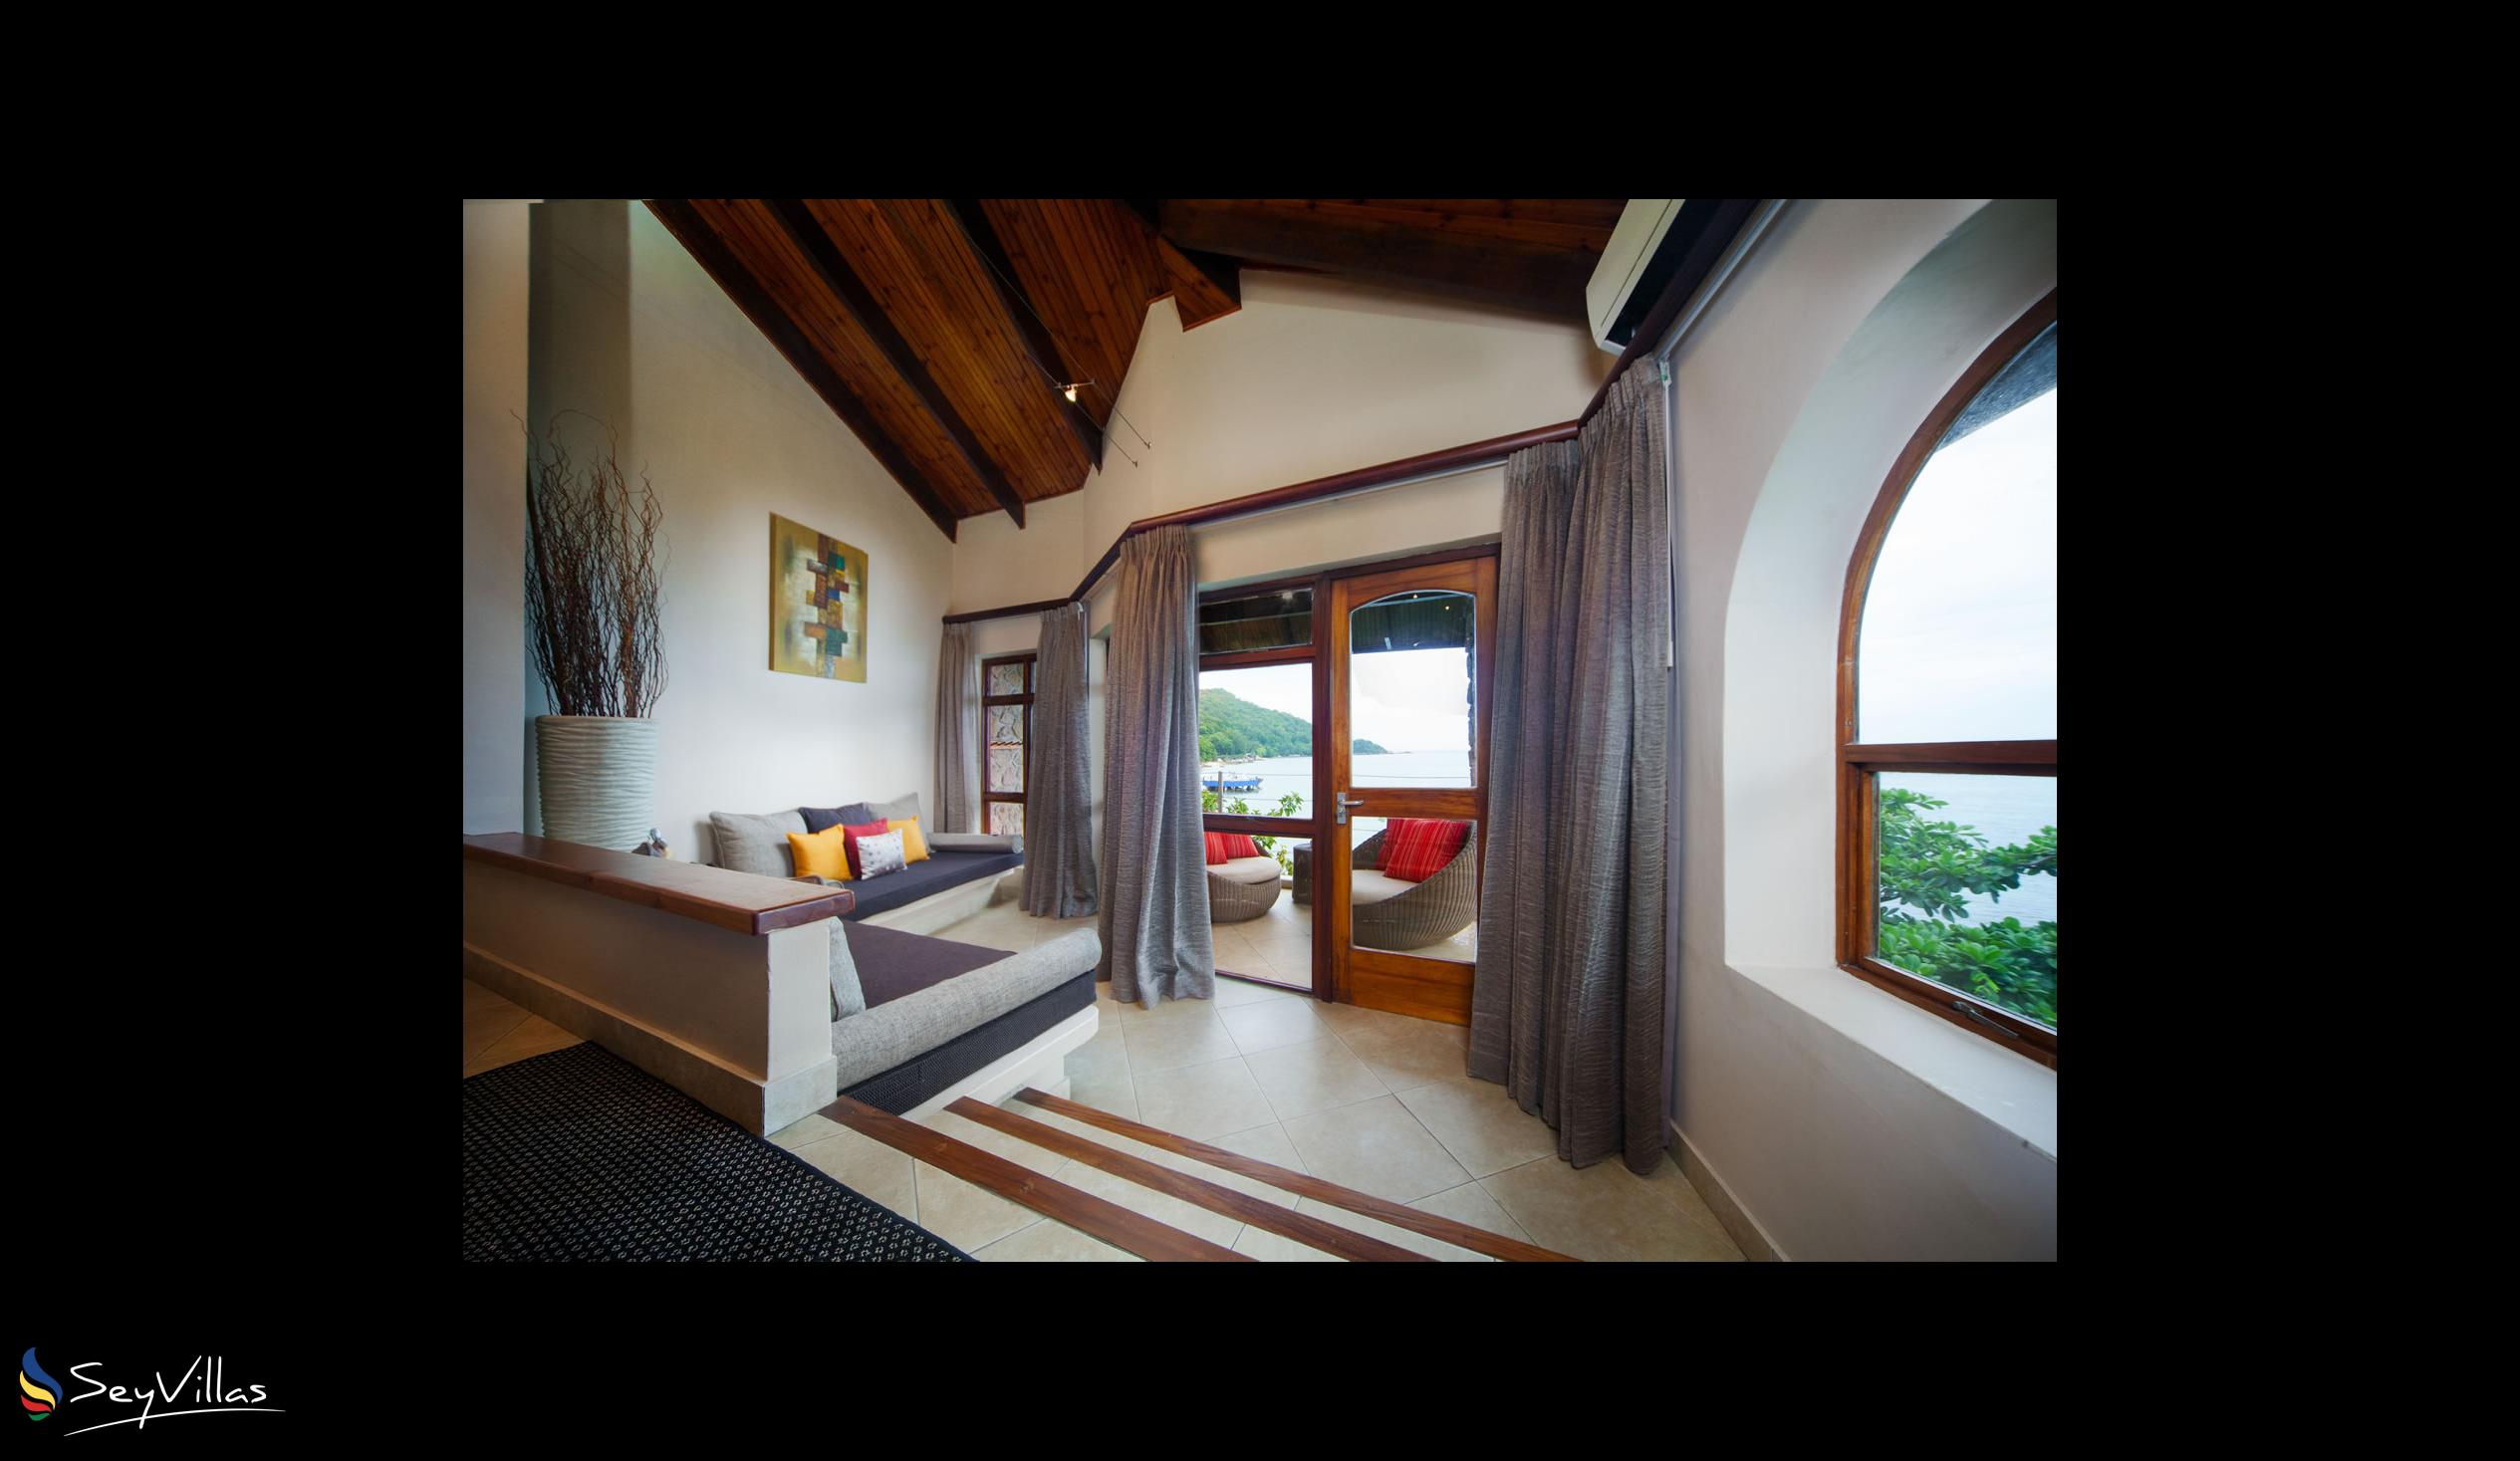 Photo 78: Coco de Mer & Black Parrot Suites - Standard - Praslin (Seychelles)